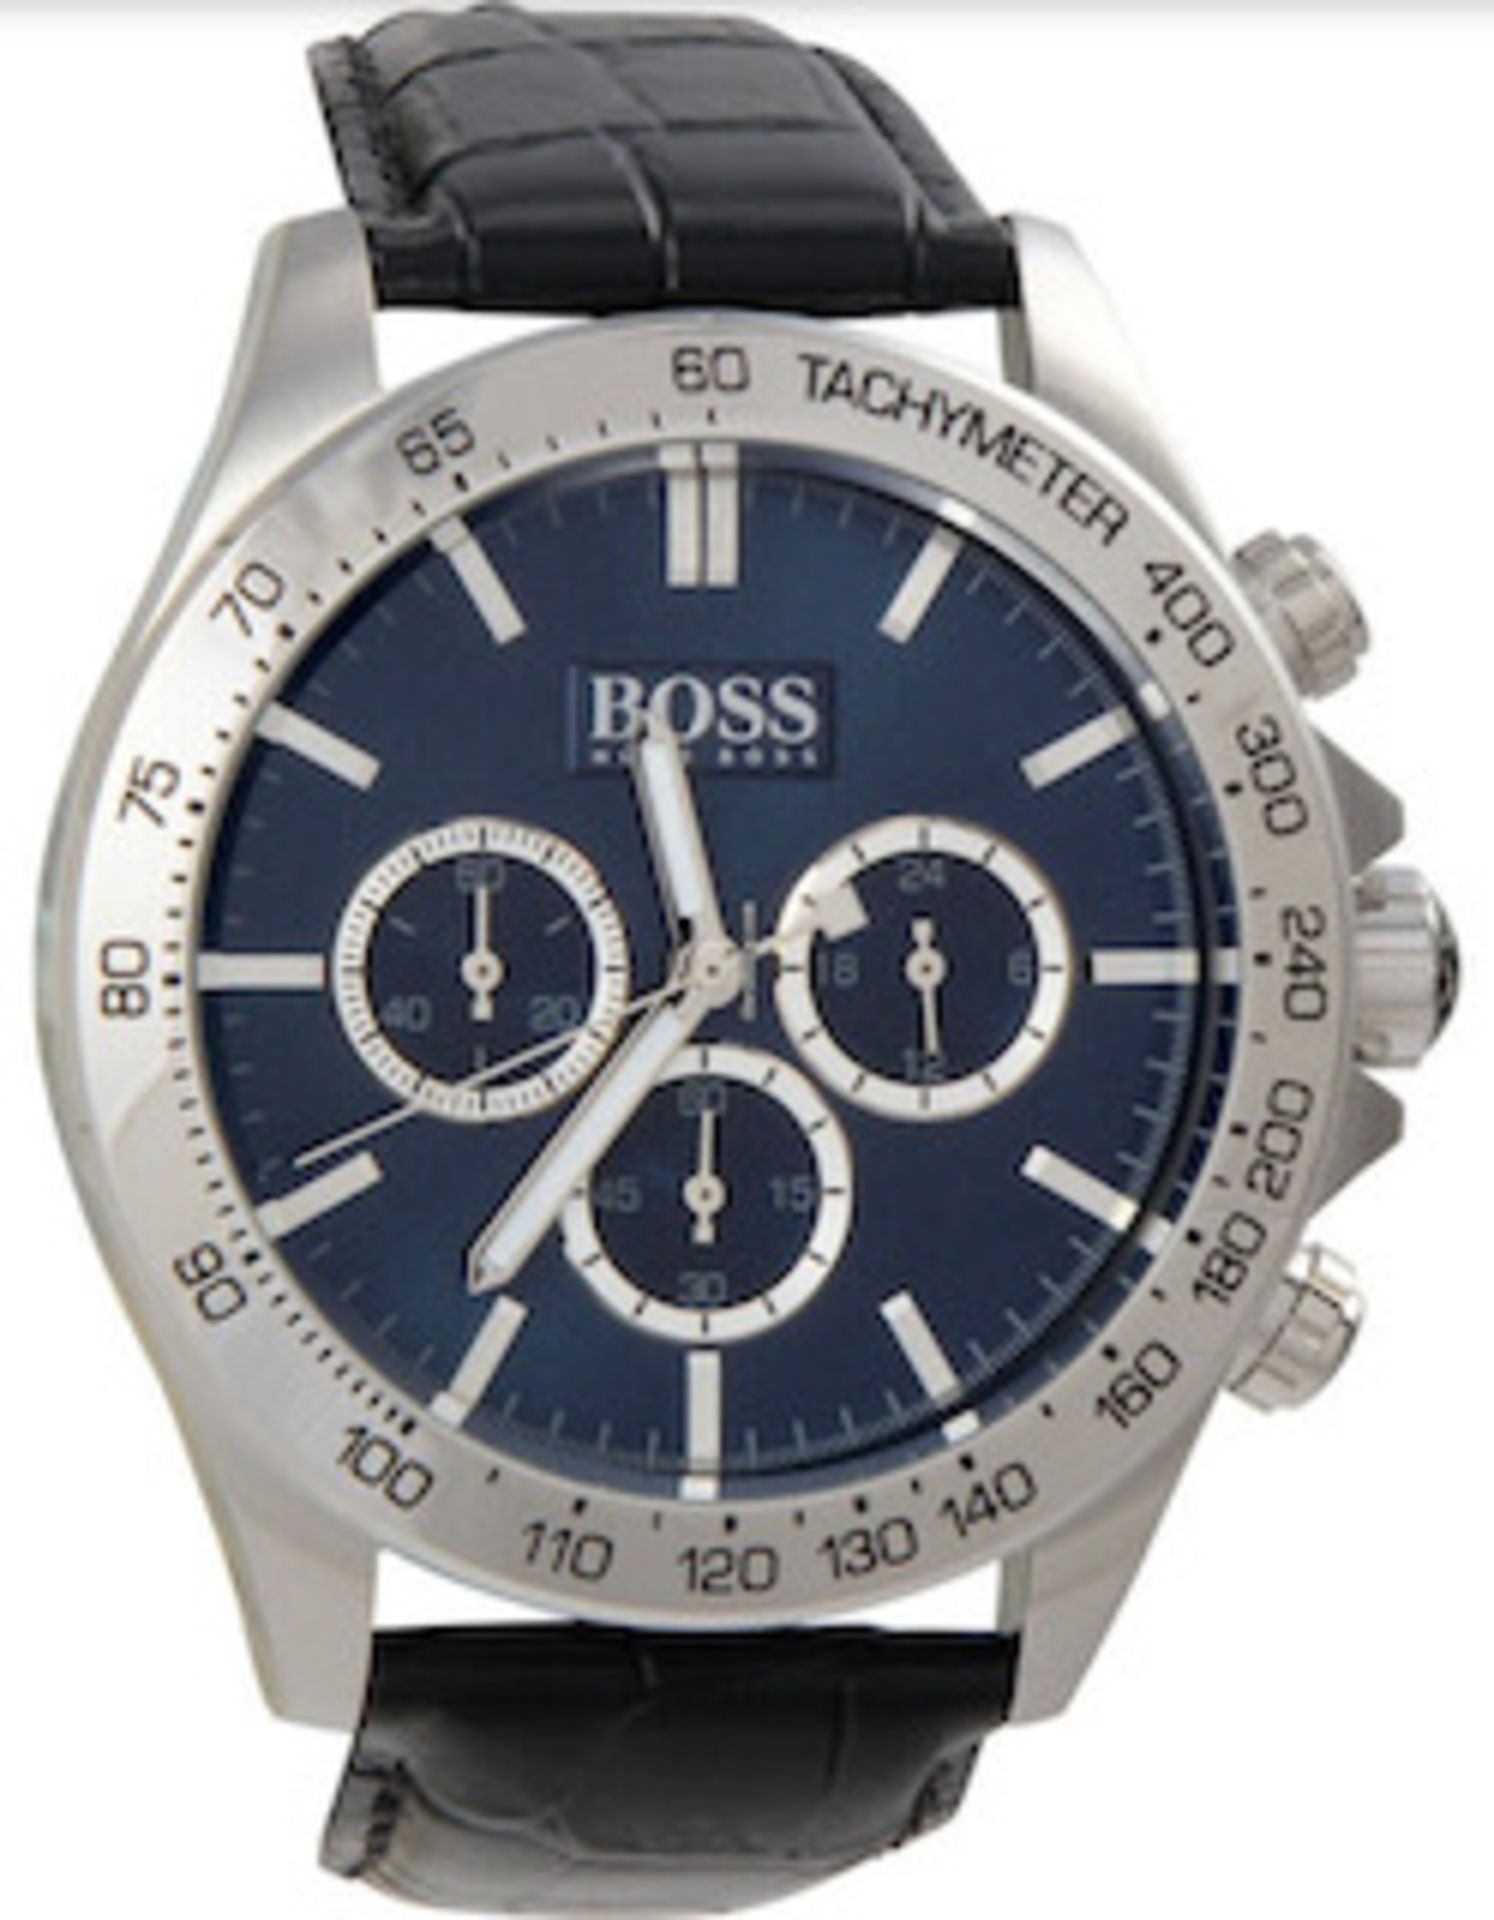 Hugo Boss 1513176 Men's Ikon Blue Dial Black Leather Strap Chronograph Watch - Image 3 of 6